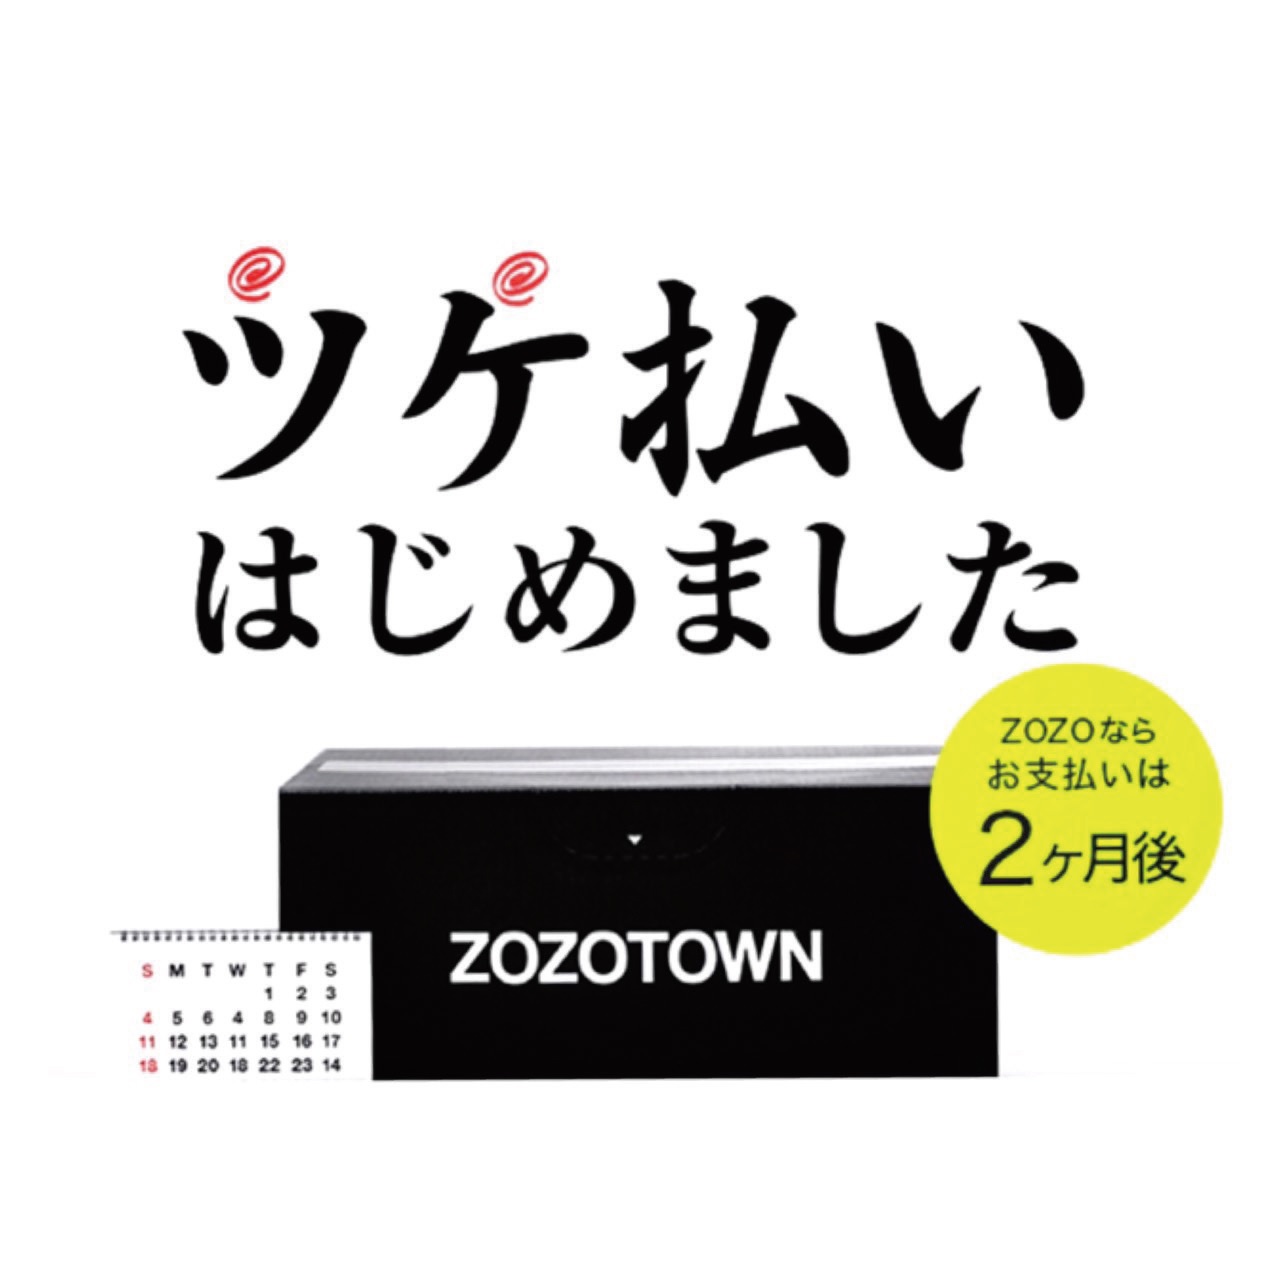 Zozotownの決済サービス ツケ払い 30代を中心に幅広い顧客が利用 スタートトゥデイ ペイメントナビ